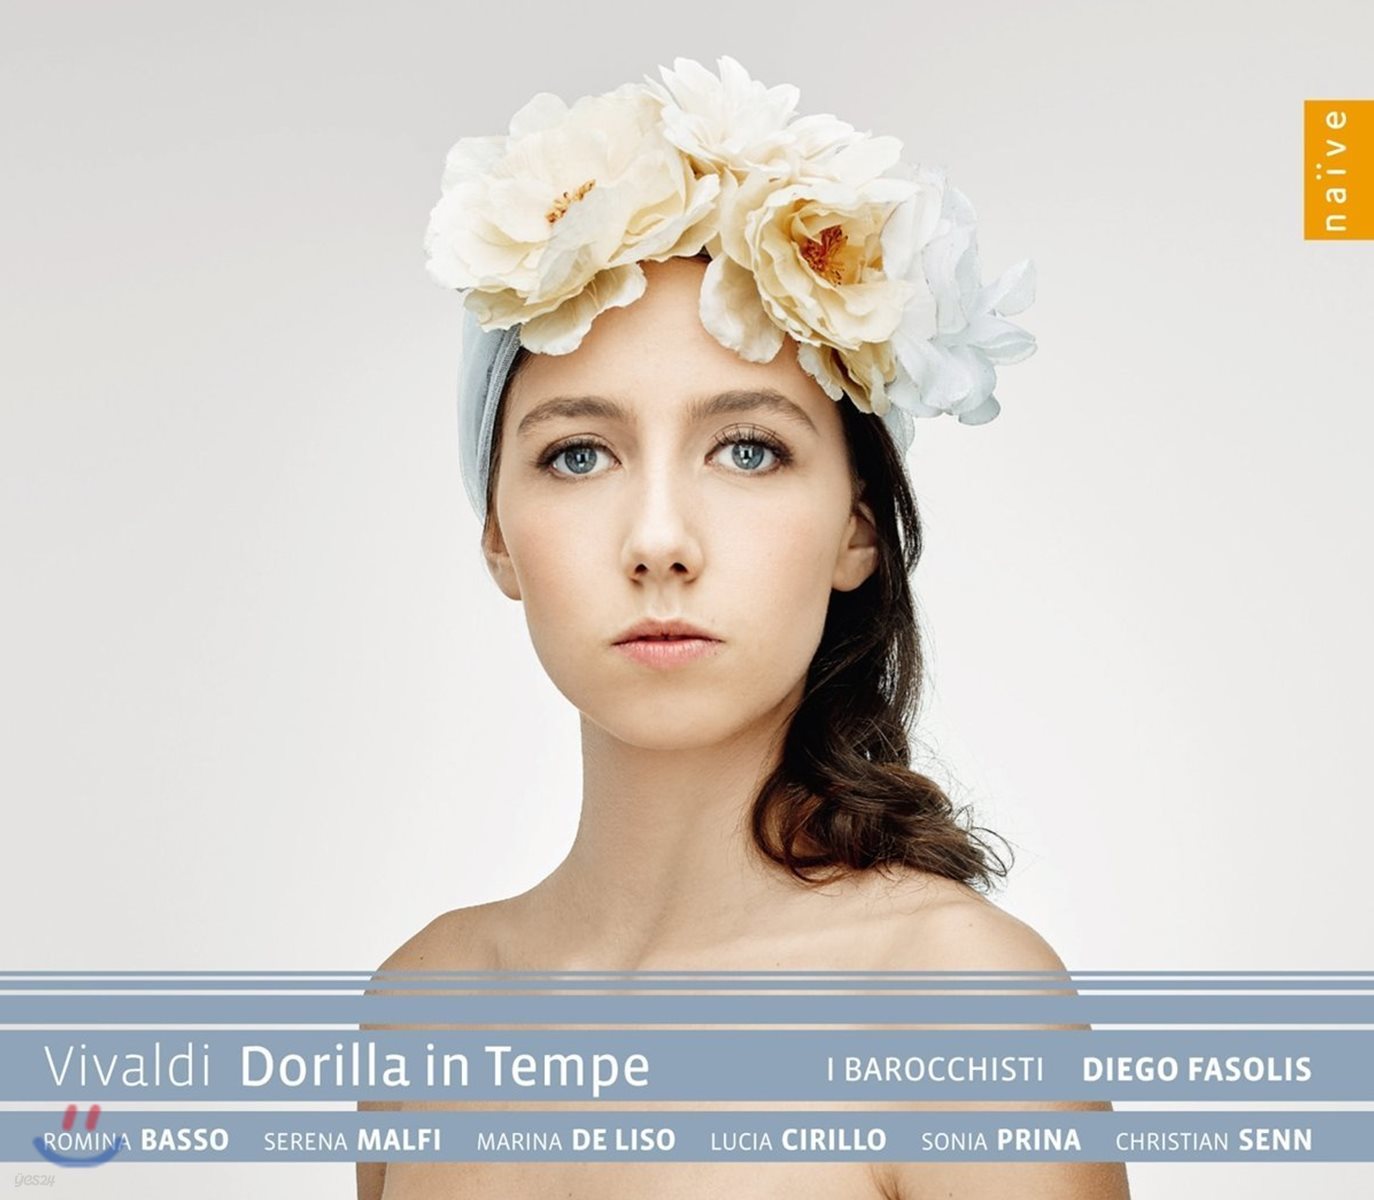 Diego Fasolis / Romina Basso 비발디: 오페라 '템페의 도릴라' 전곡 (Vivaldi: Dorilla in Tempe RV.709)